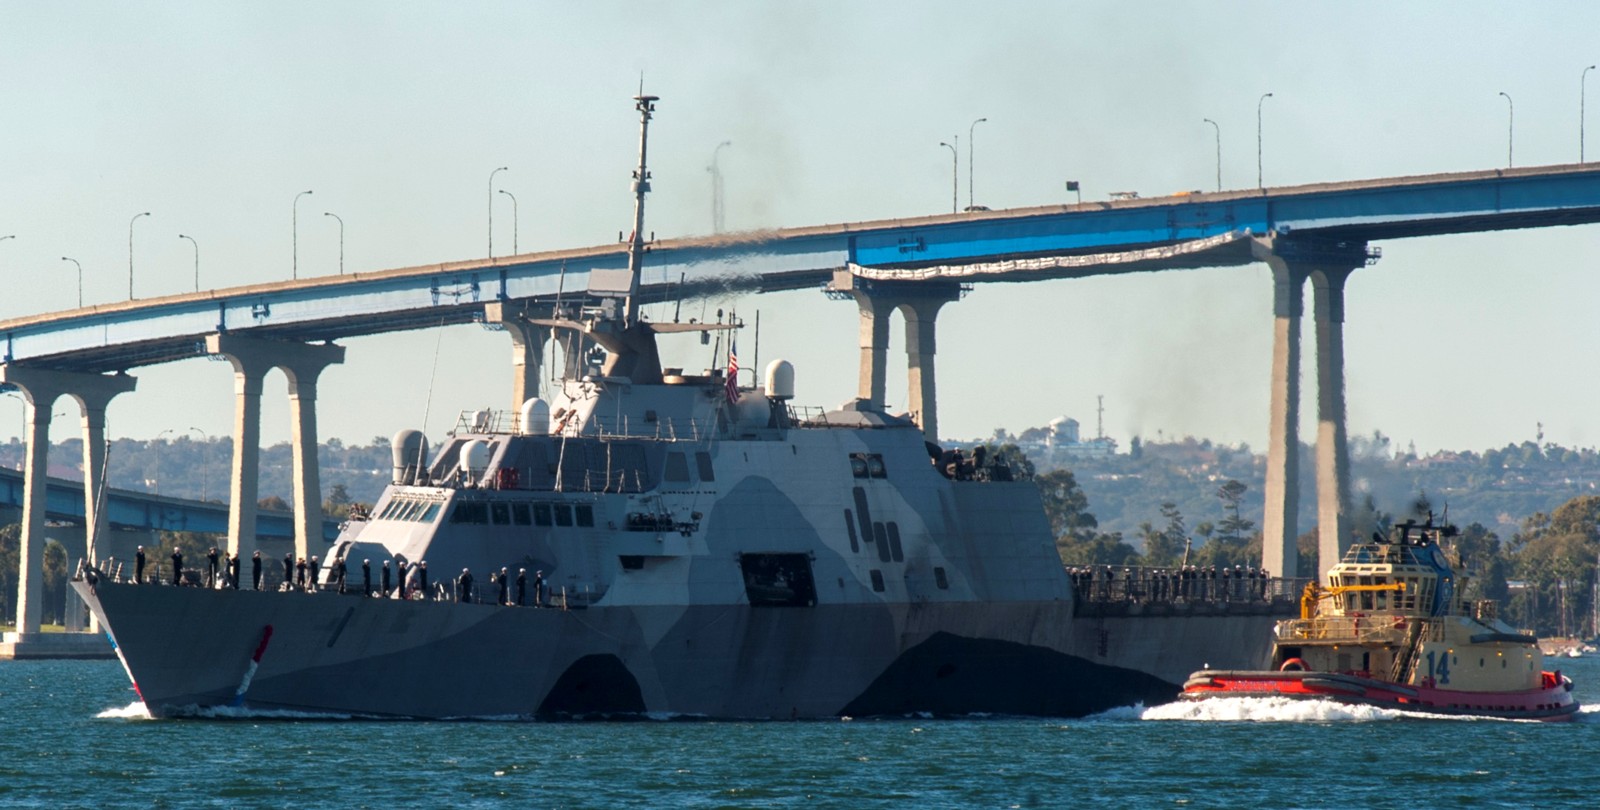 lcs-1 uss freedom class littoral combat ship us navy 10 san diego california